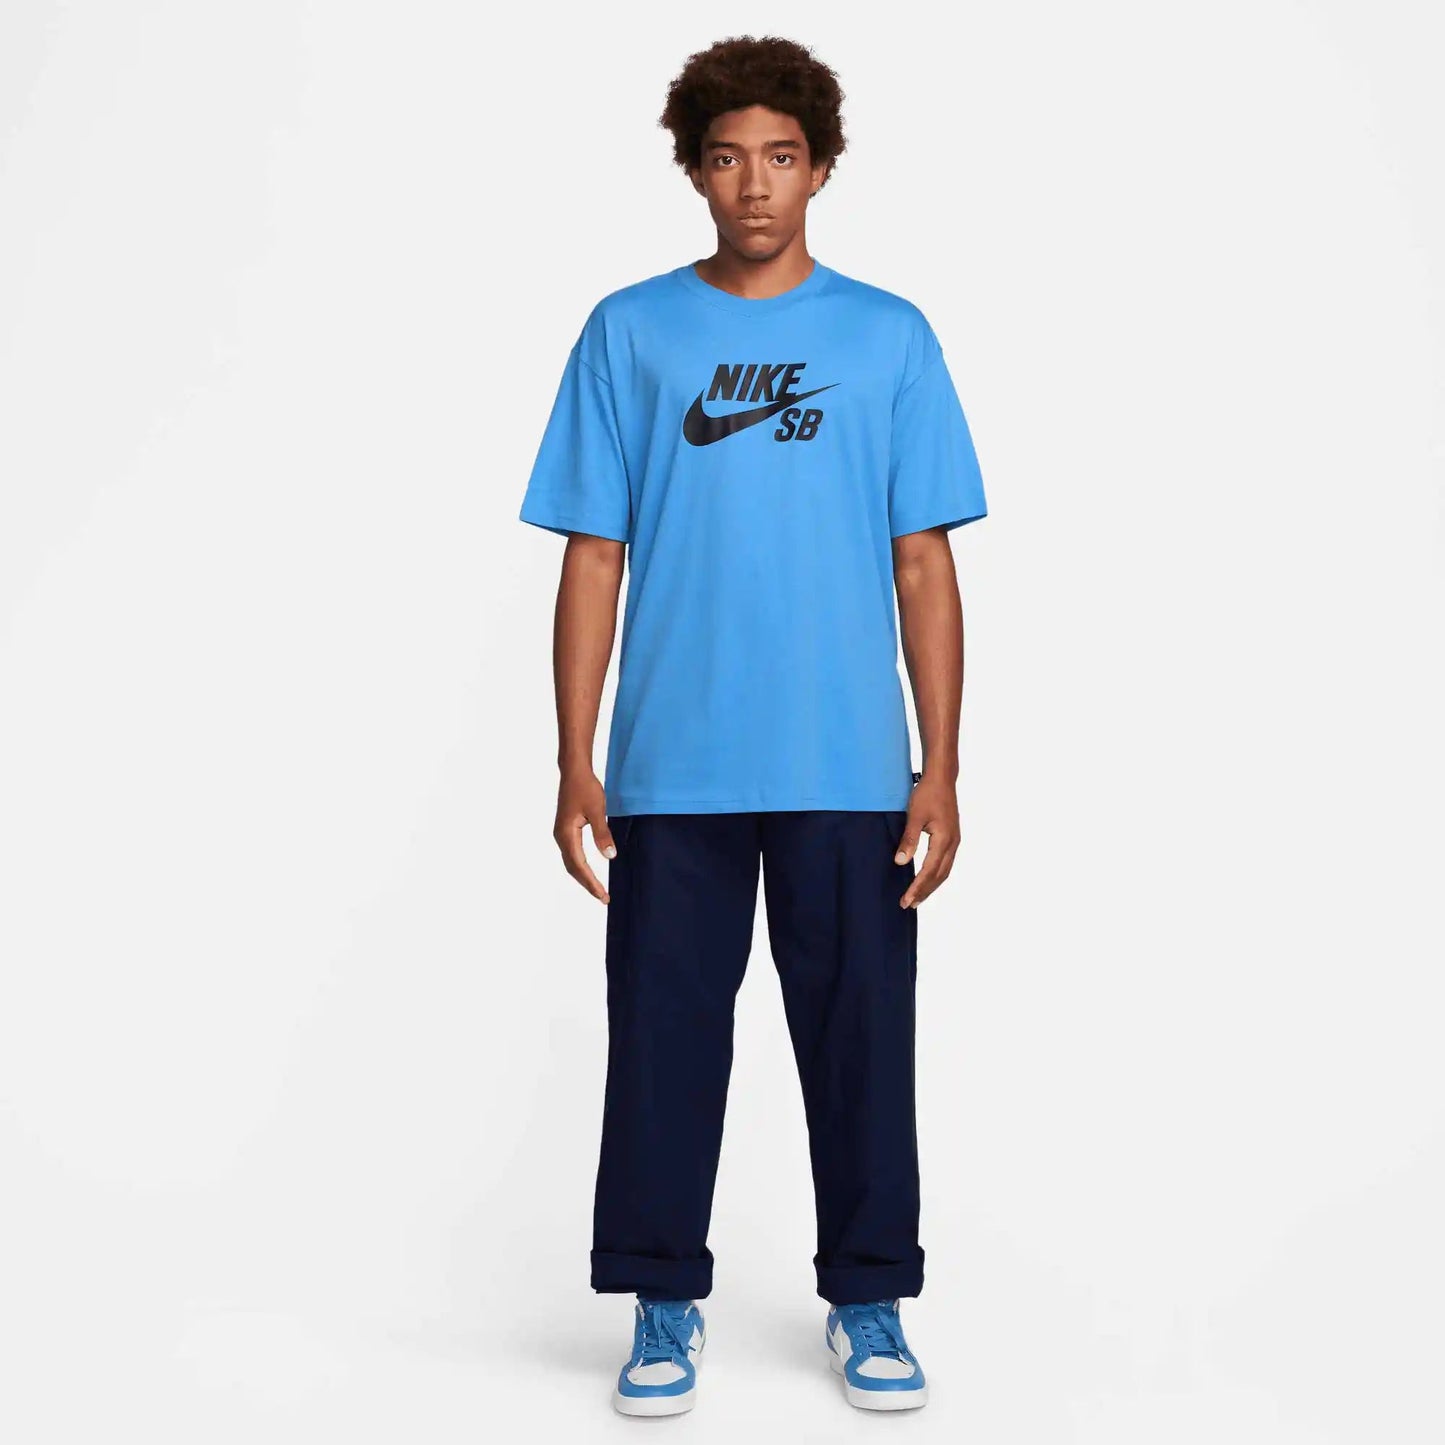 Nike SB Logo Skate T-Shirt, university blue/black - Tiki Room Skateboards - 3